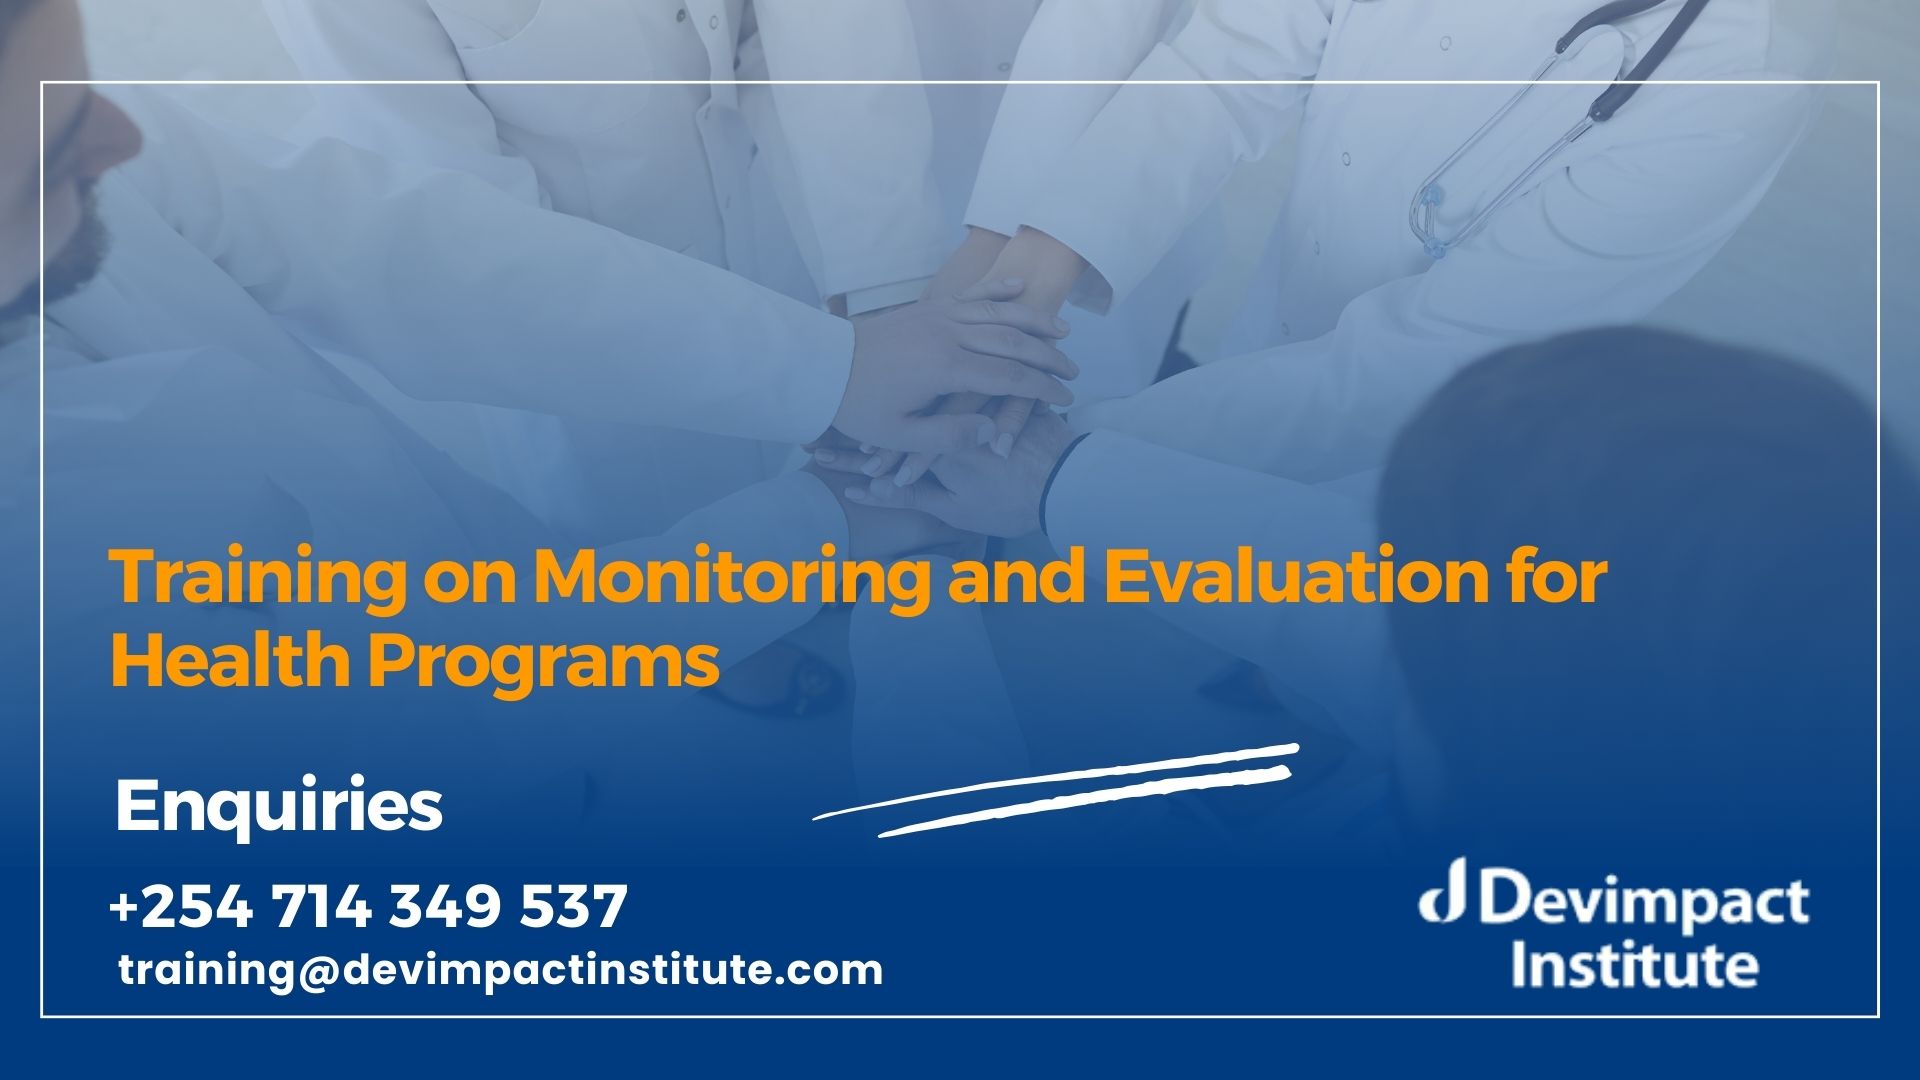 Training on Monitoring and Evaluation for Health Programs, Devimpact Institute, Nairobi, Kenya